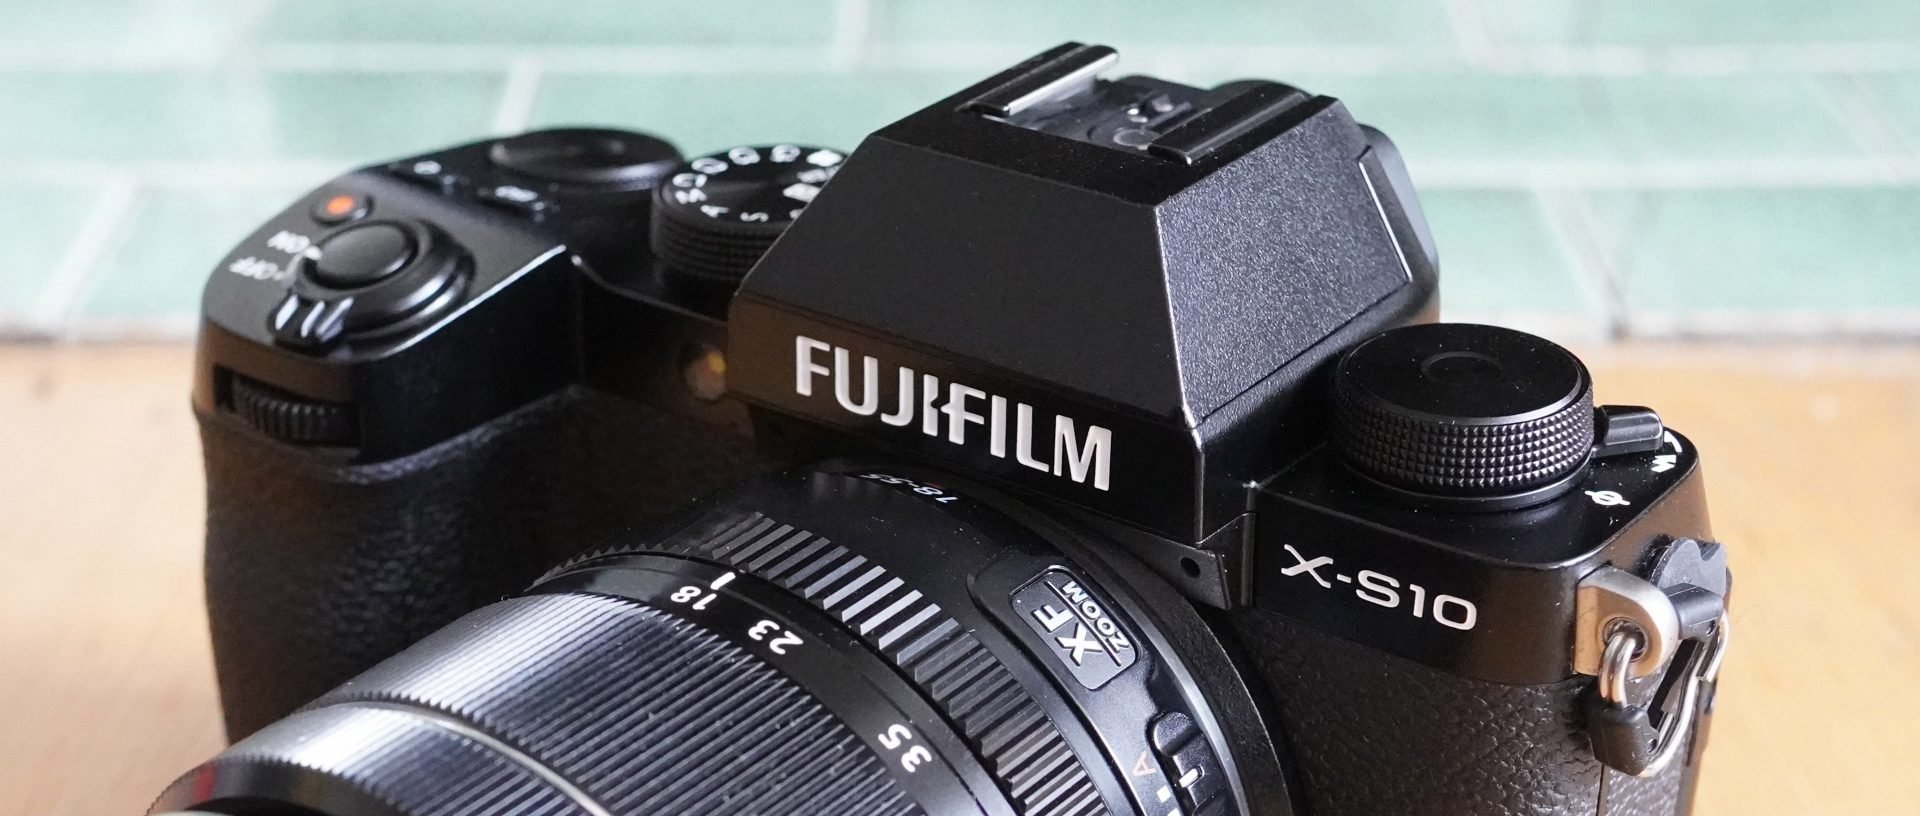 fujifilm-xs10-header1